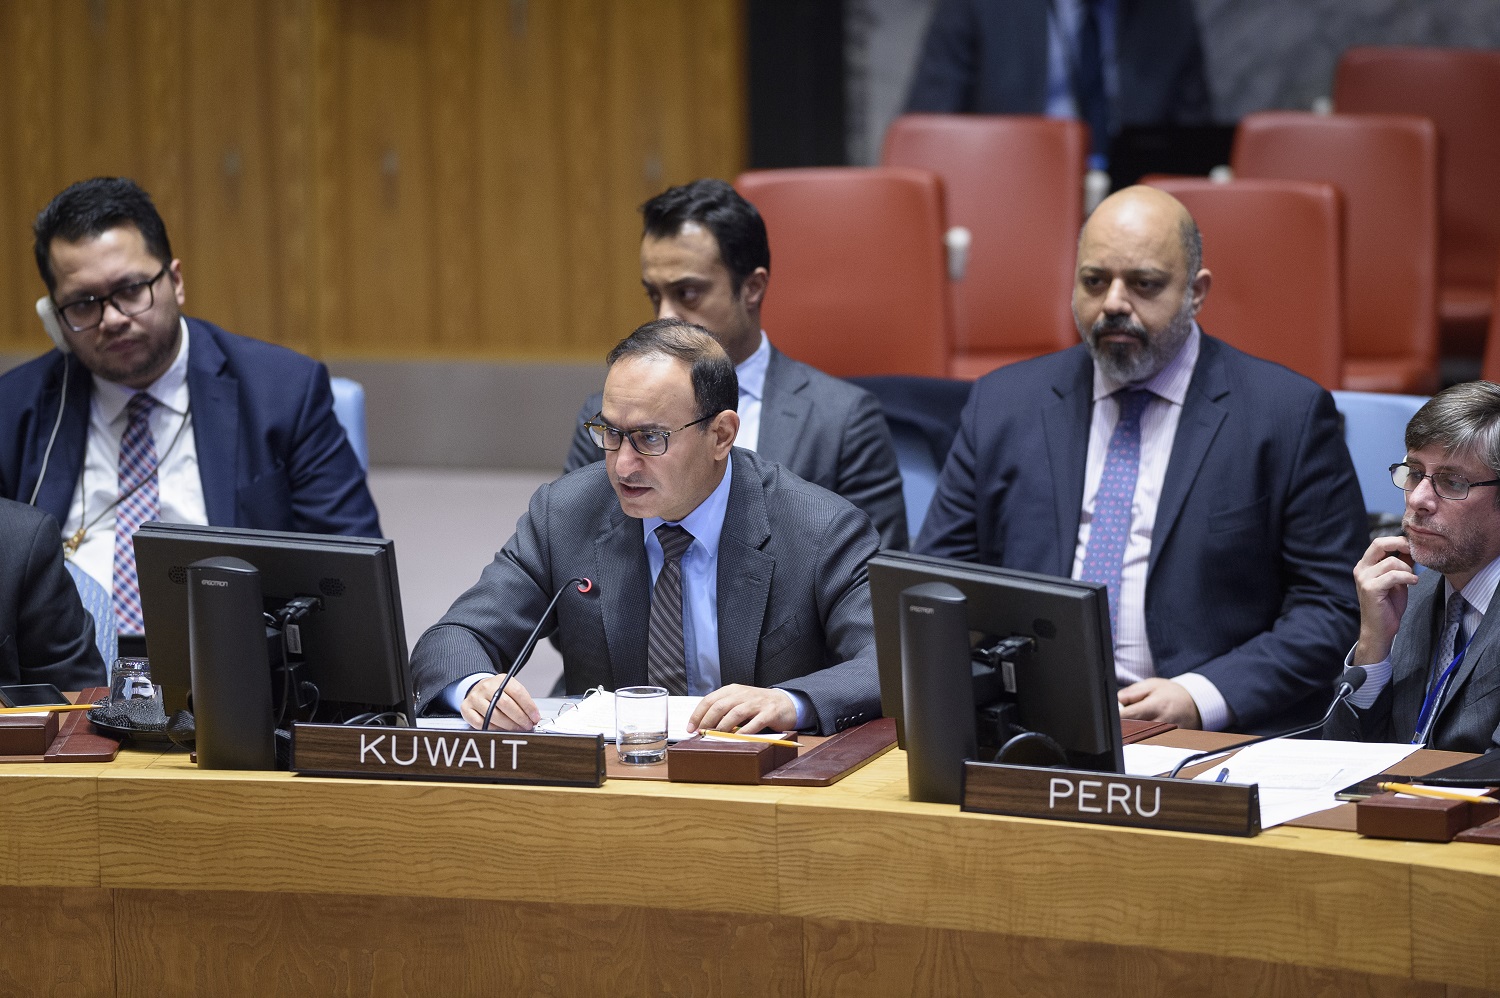 Kuwait's UN permanent delegate Ambassador Al-Otaibi 